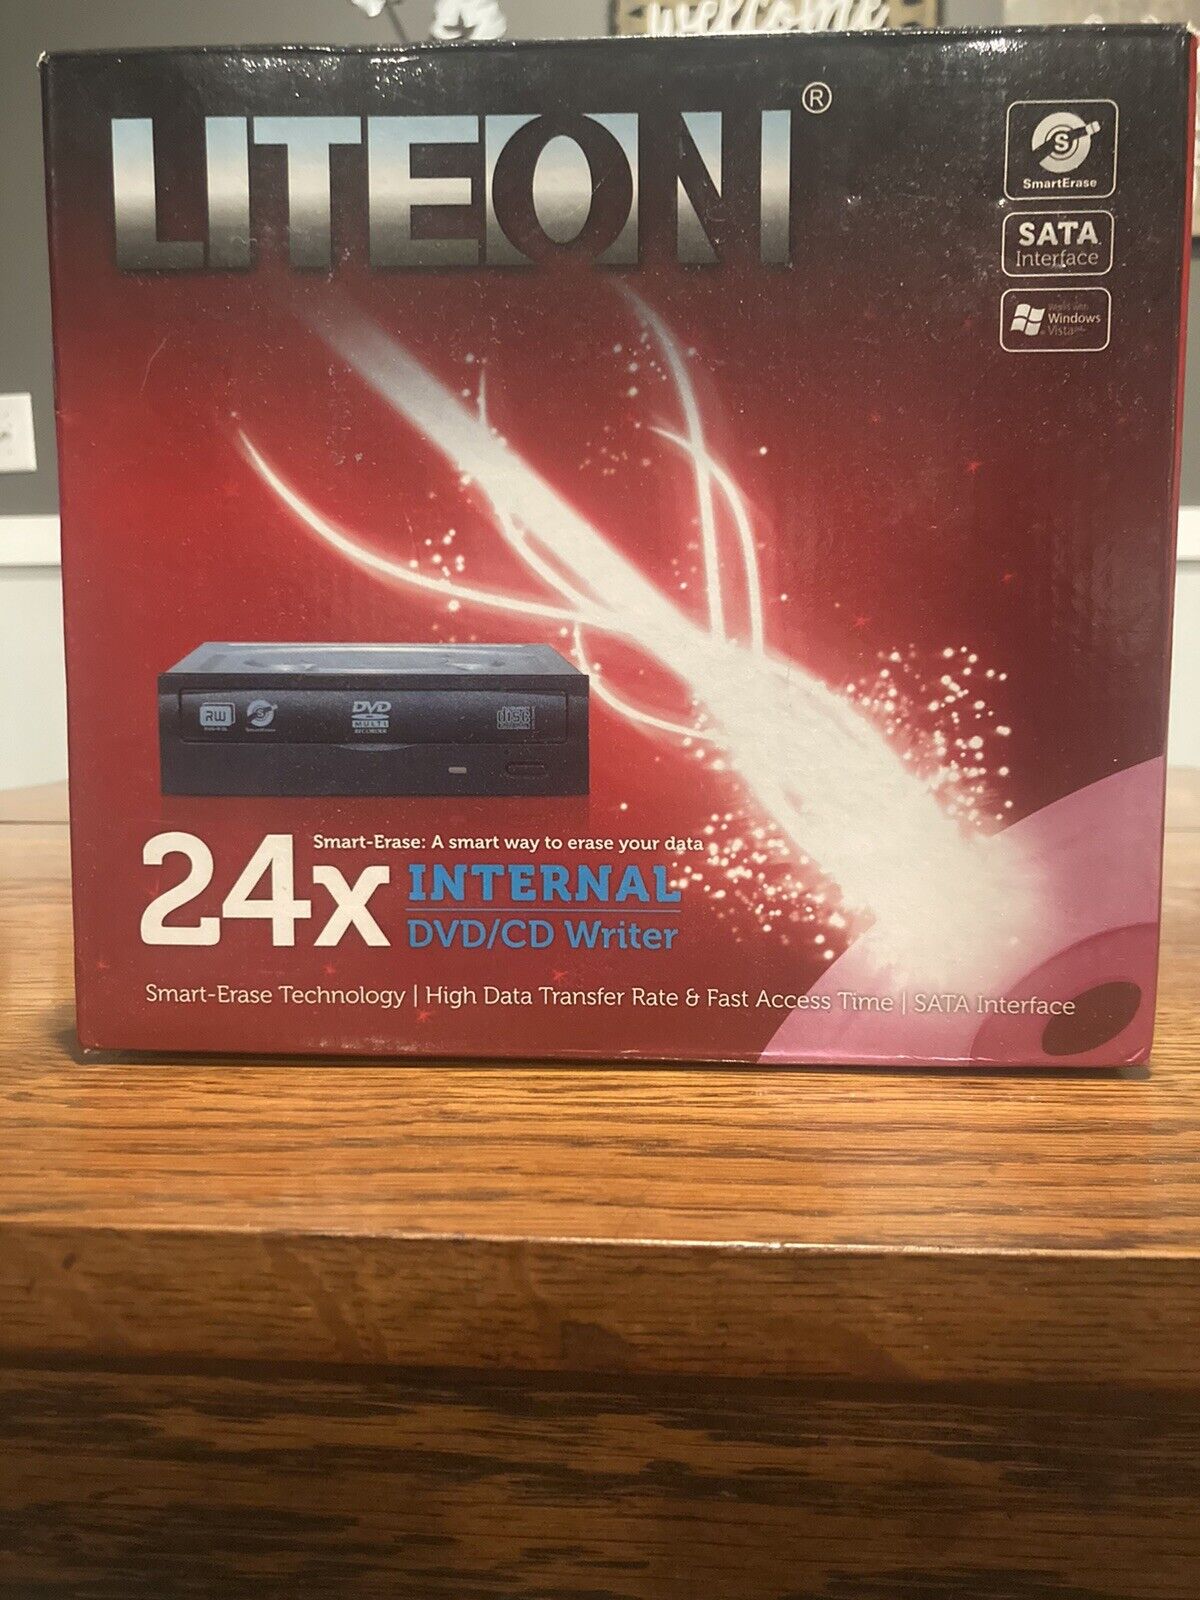 LiteOn 24X Internal DVD/CD Writer (New in the Box)